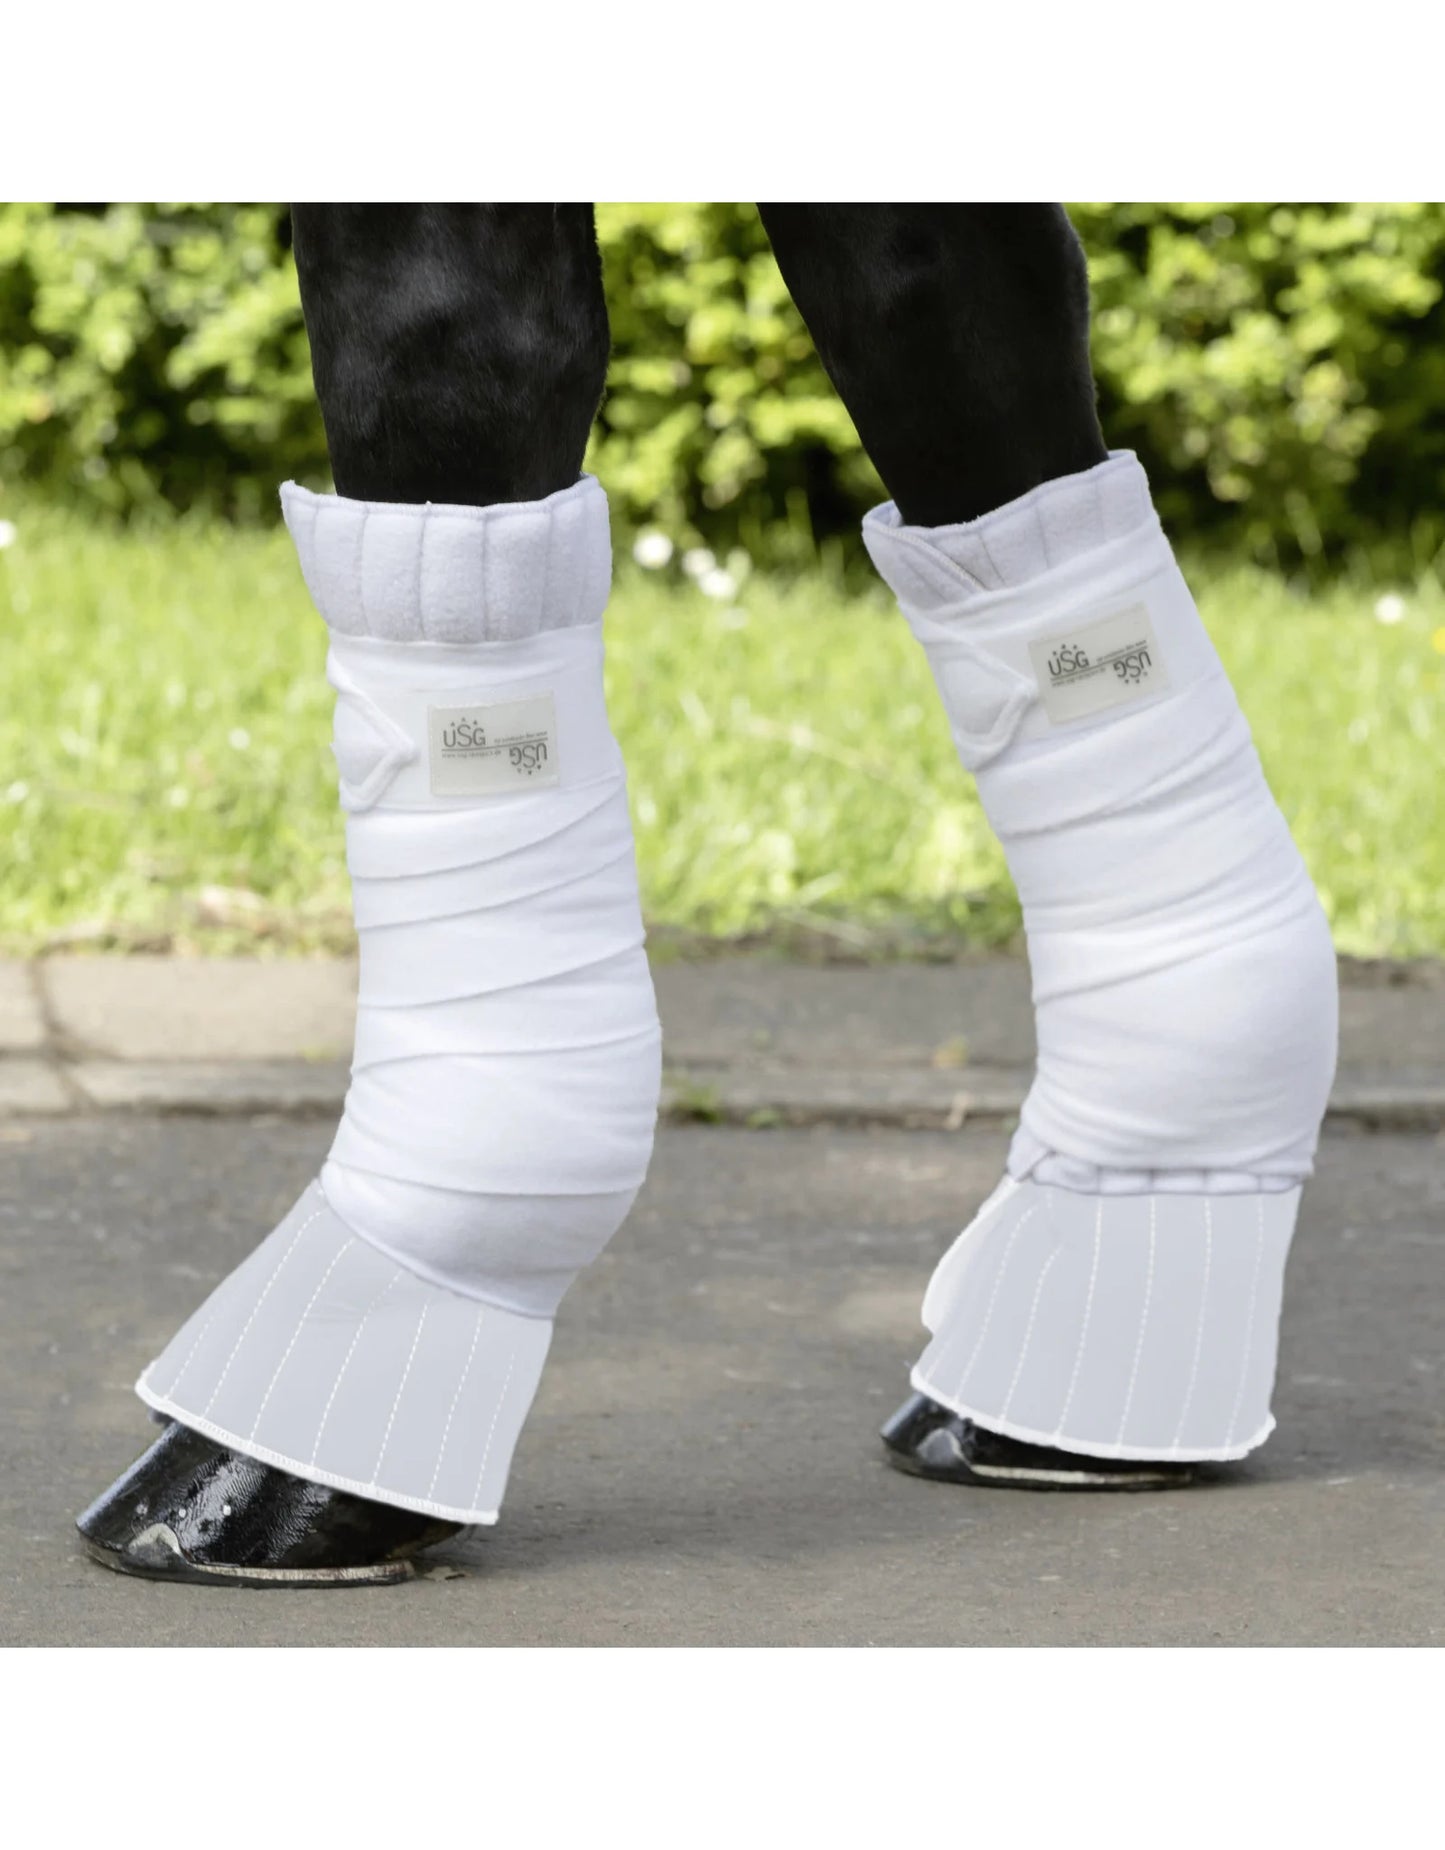 USG || Leg Pads with Coronet Protection